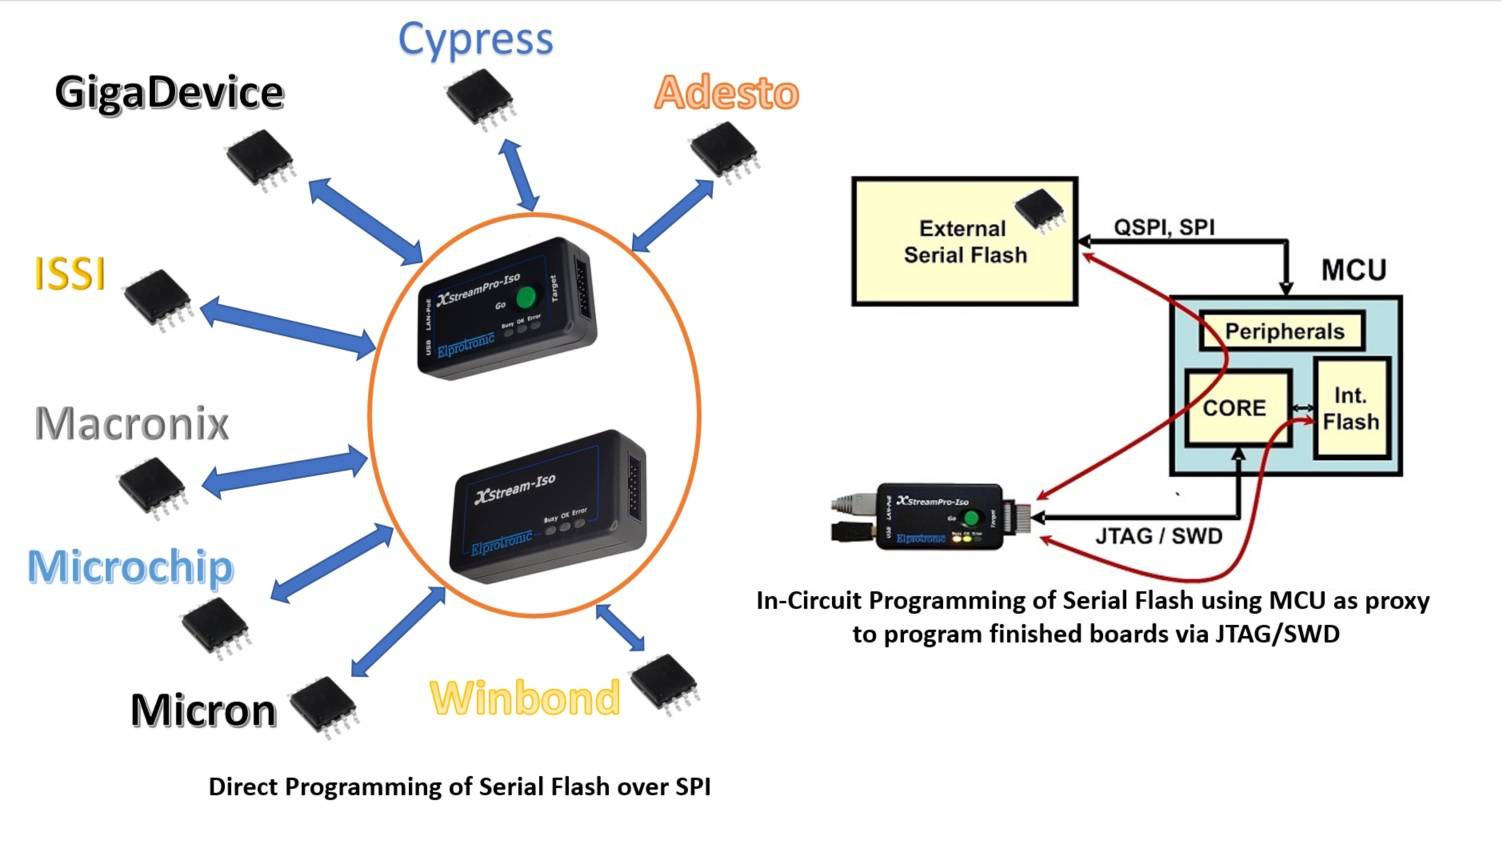 Direct Programming of serial flash over SPI